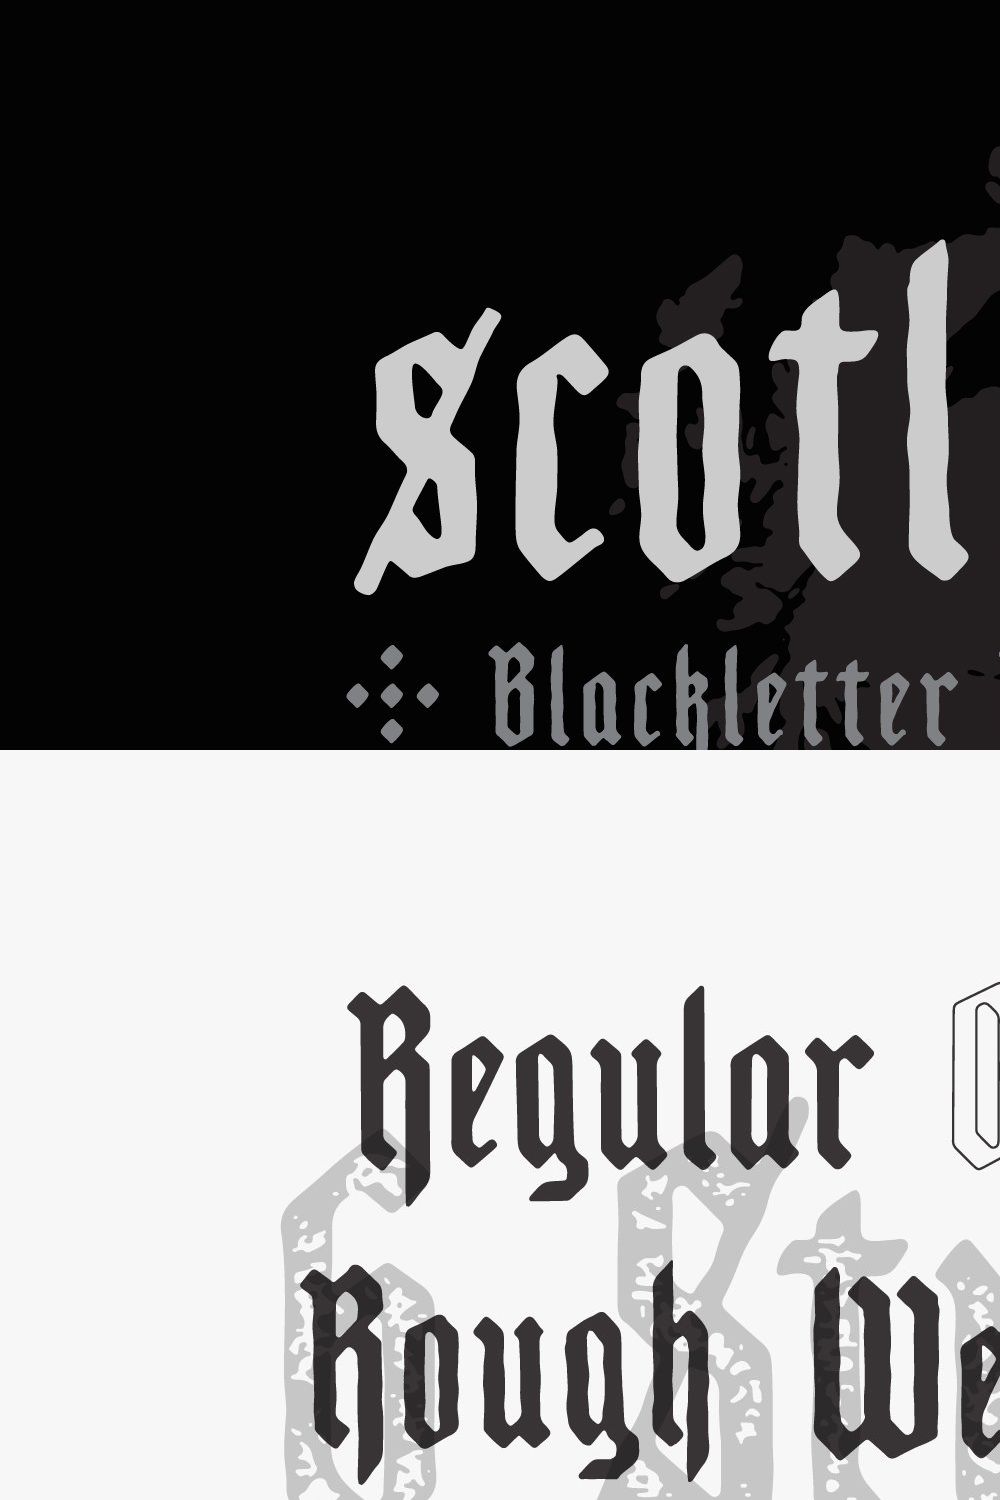 Scotland - Blackletter Display pinterest preview image.